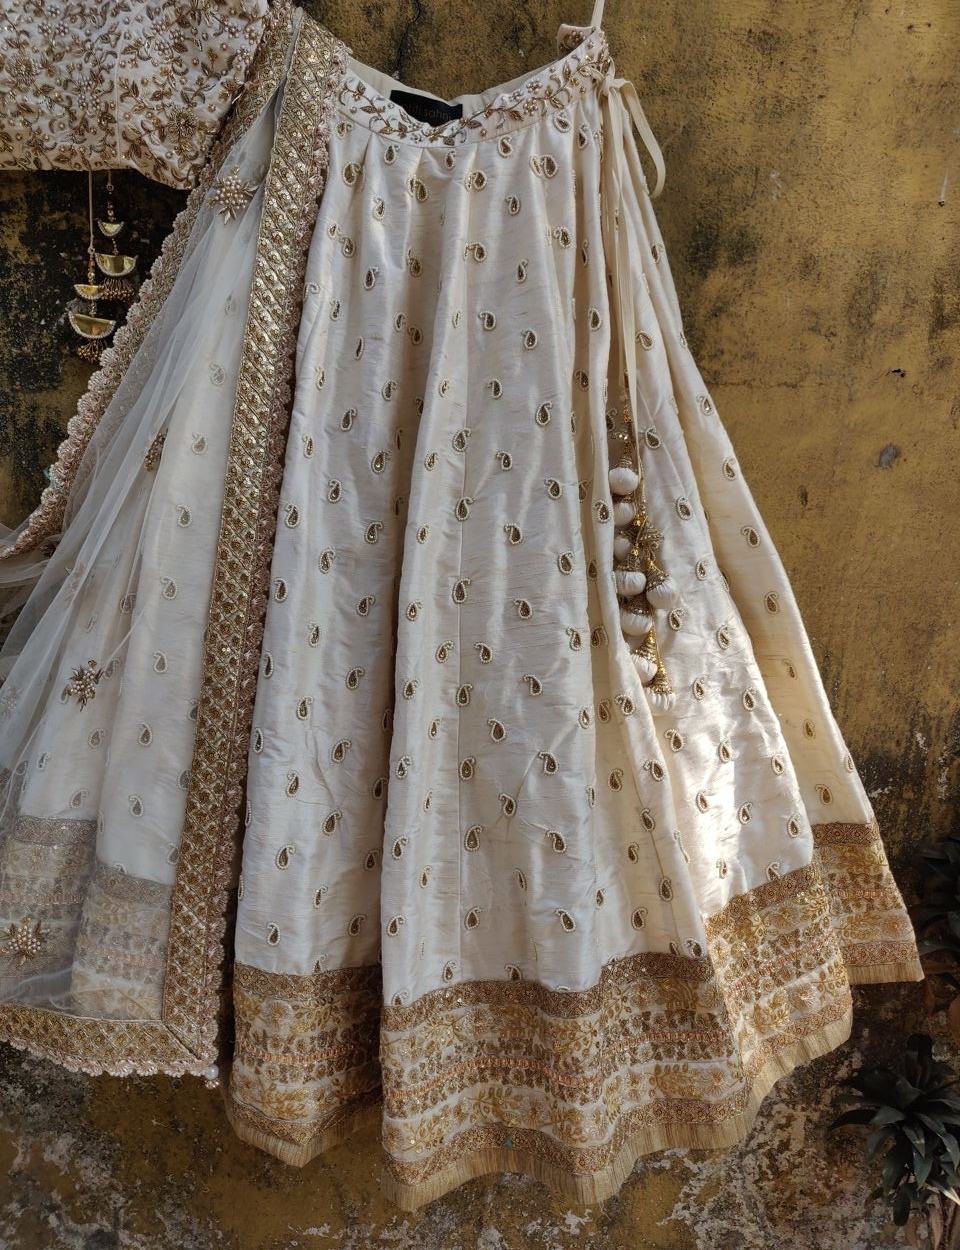 Ten Best Selling Lehenga Gown Designs On Amazon India - YouTube